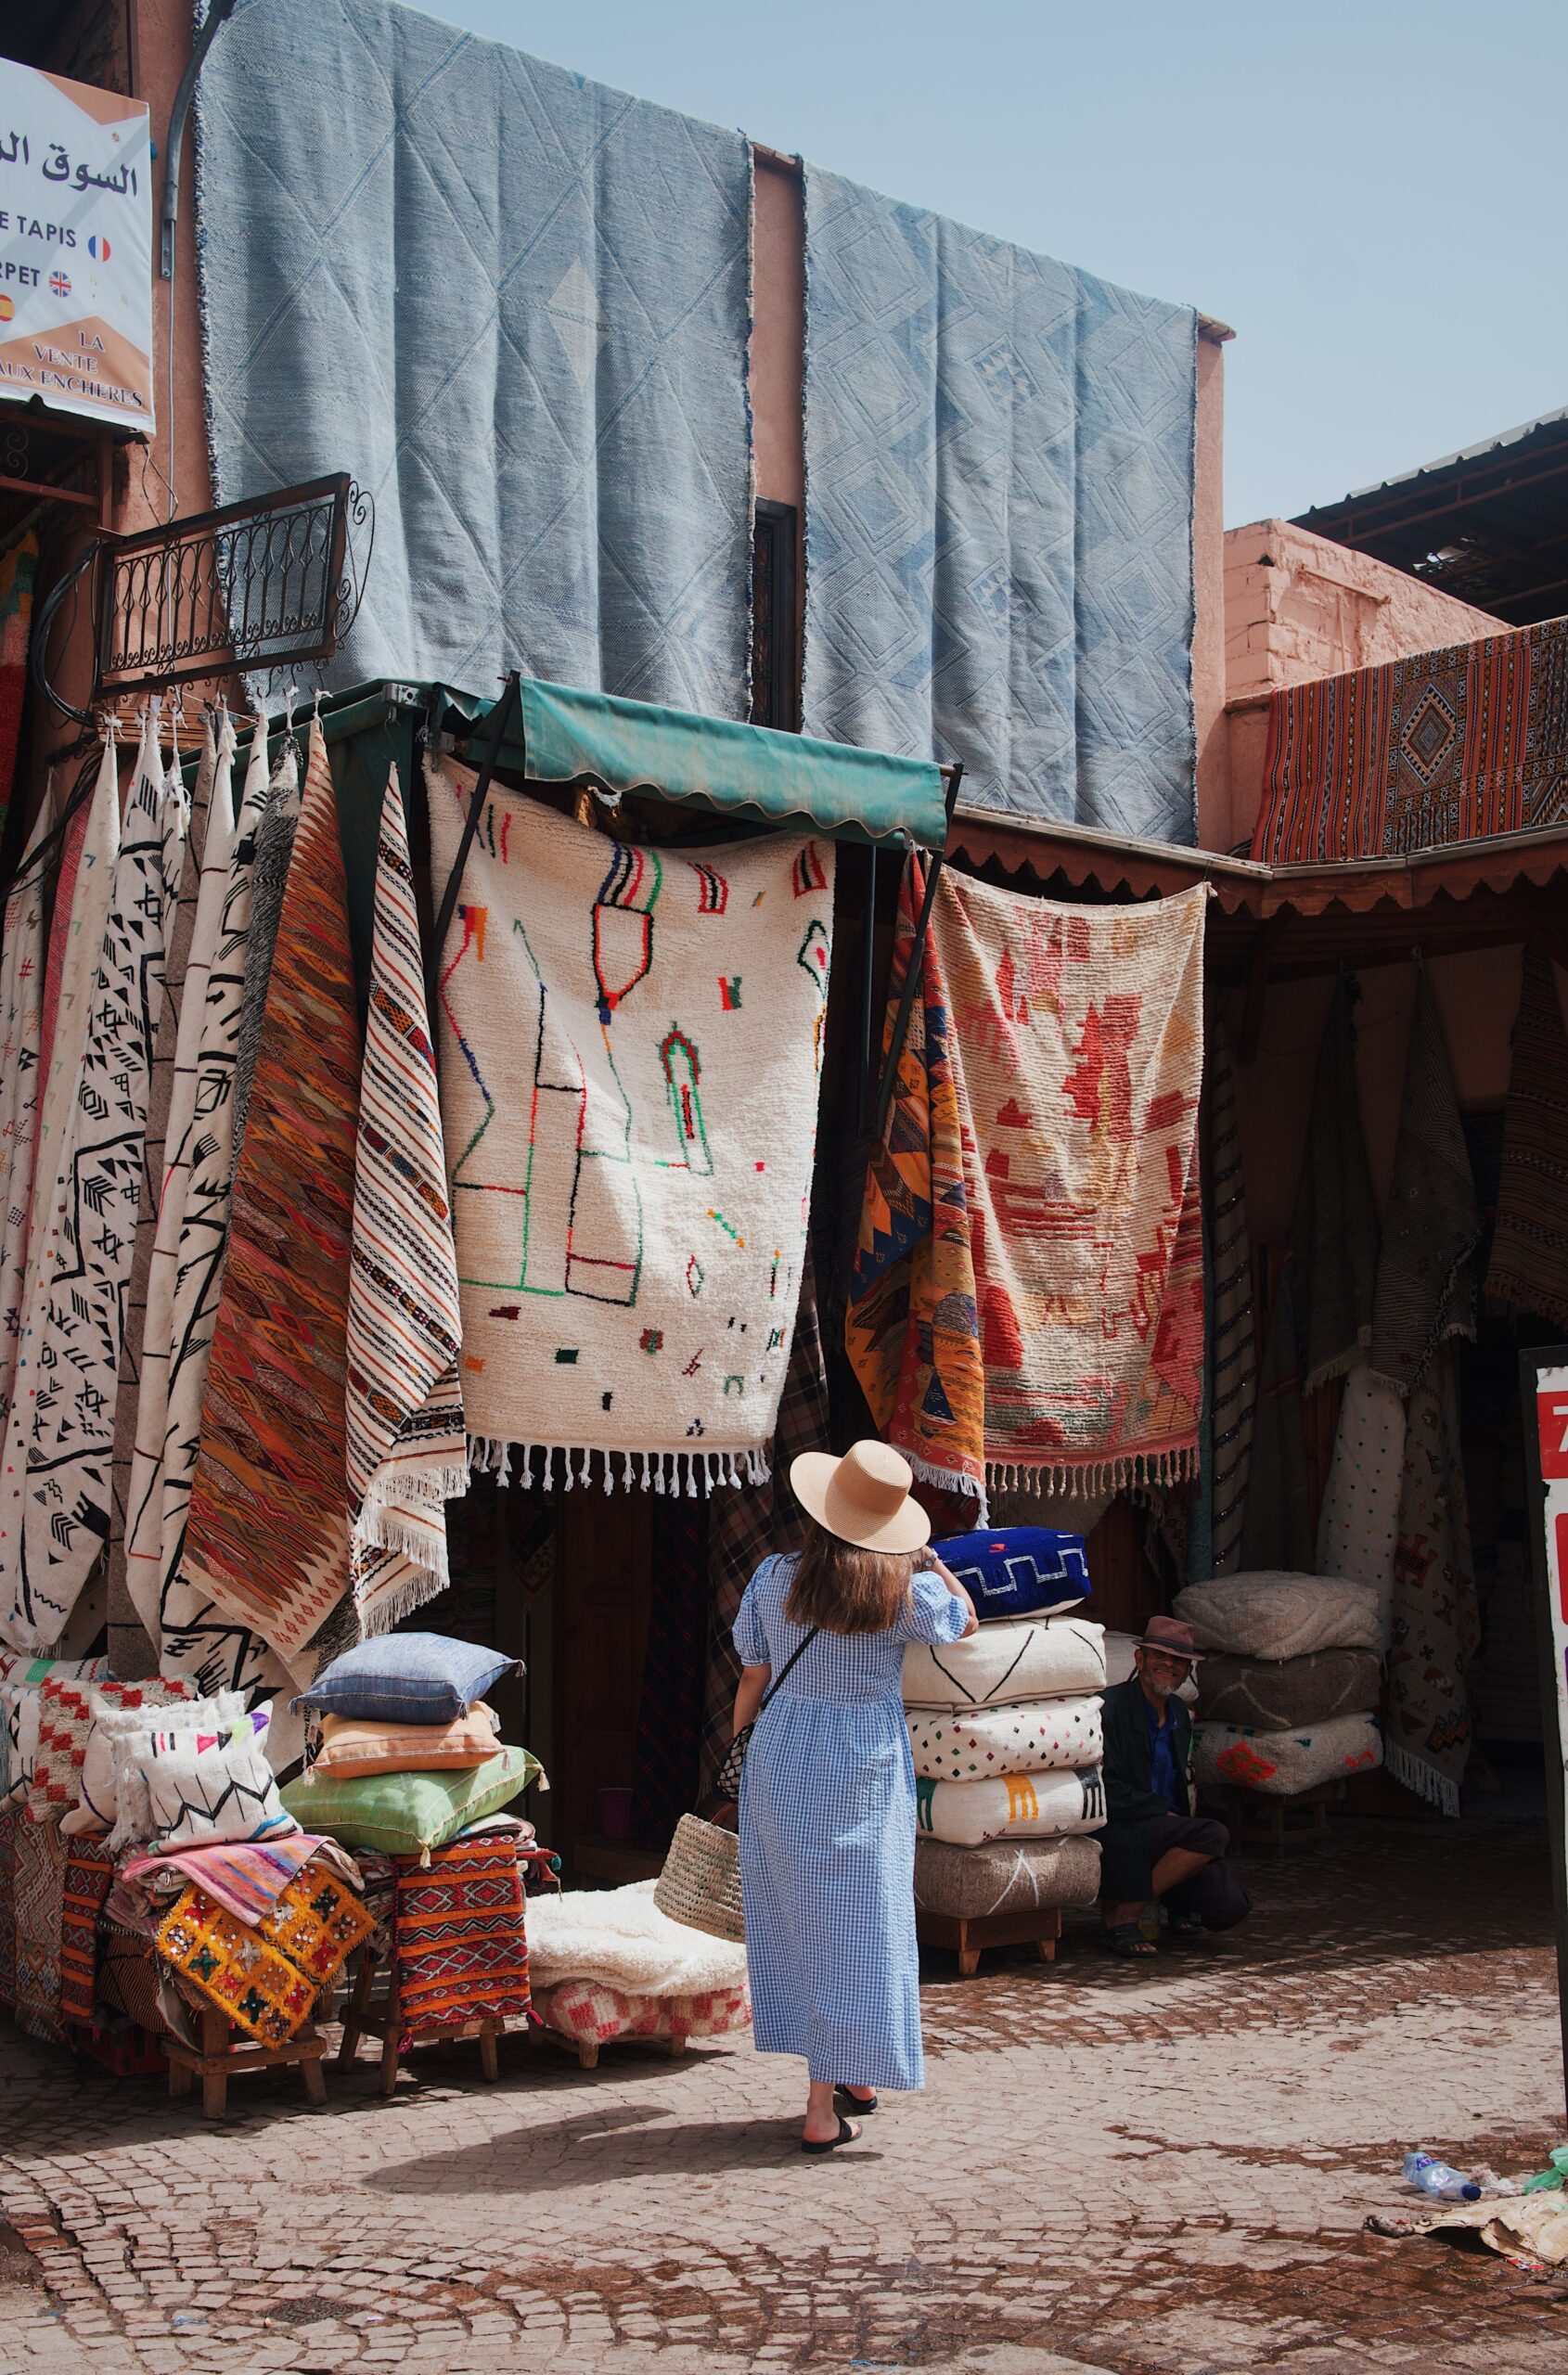 Morocco's Medinas and Souks: A Shopper's Paradise